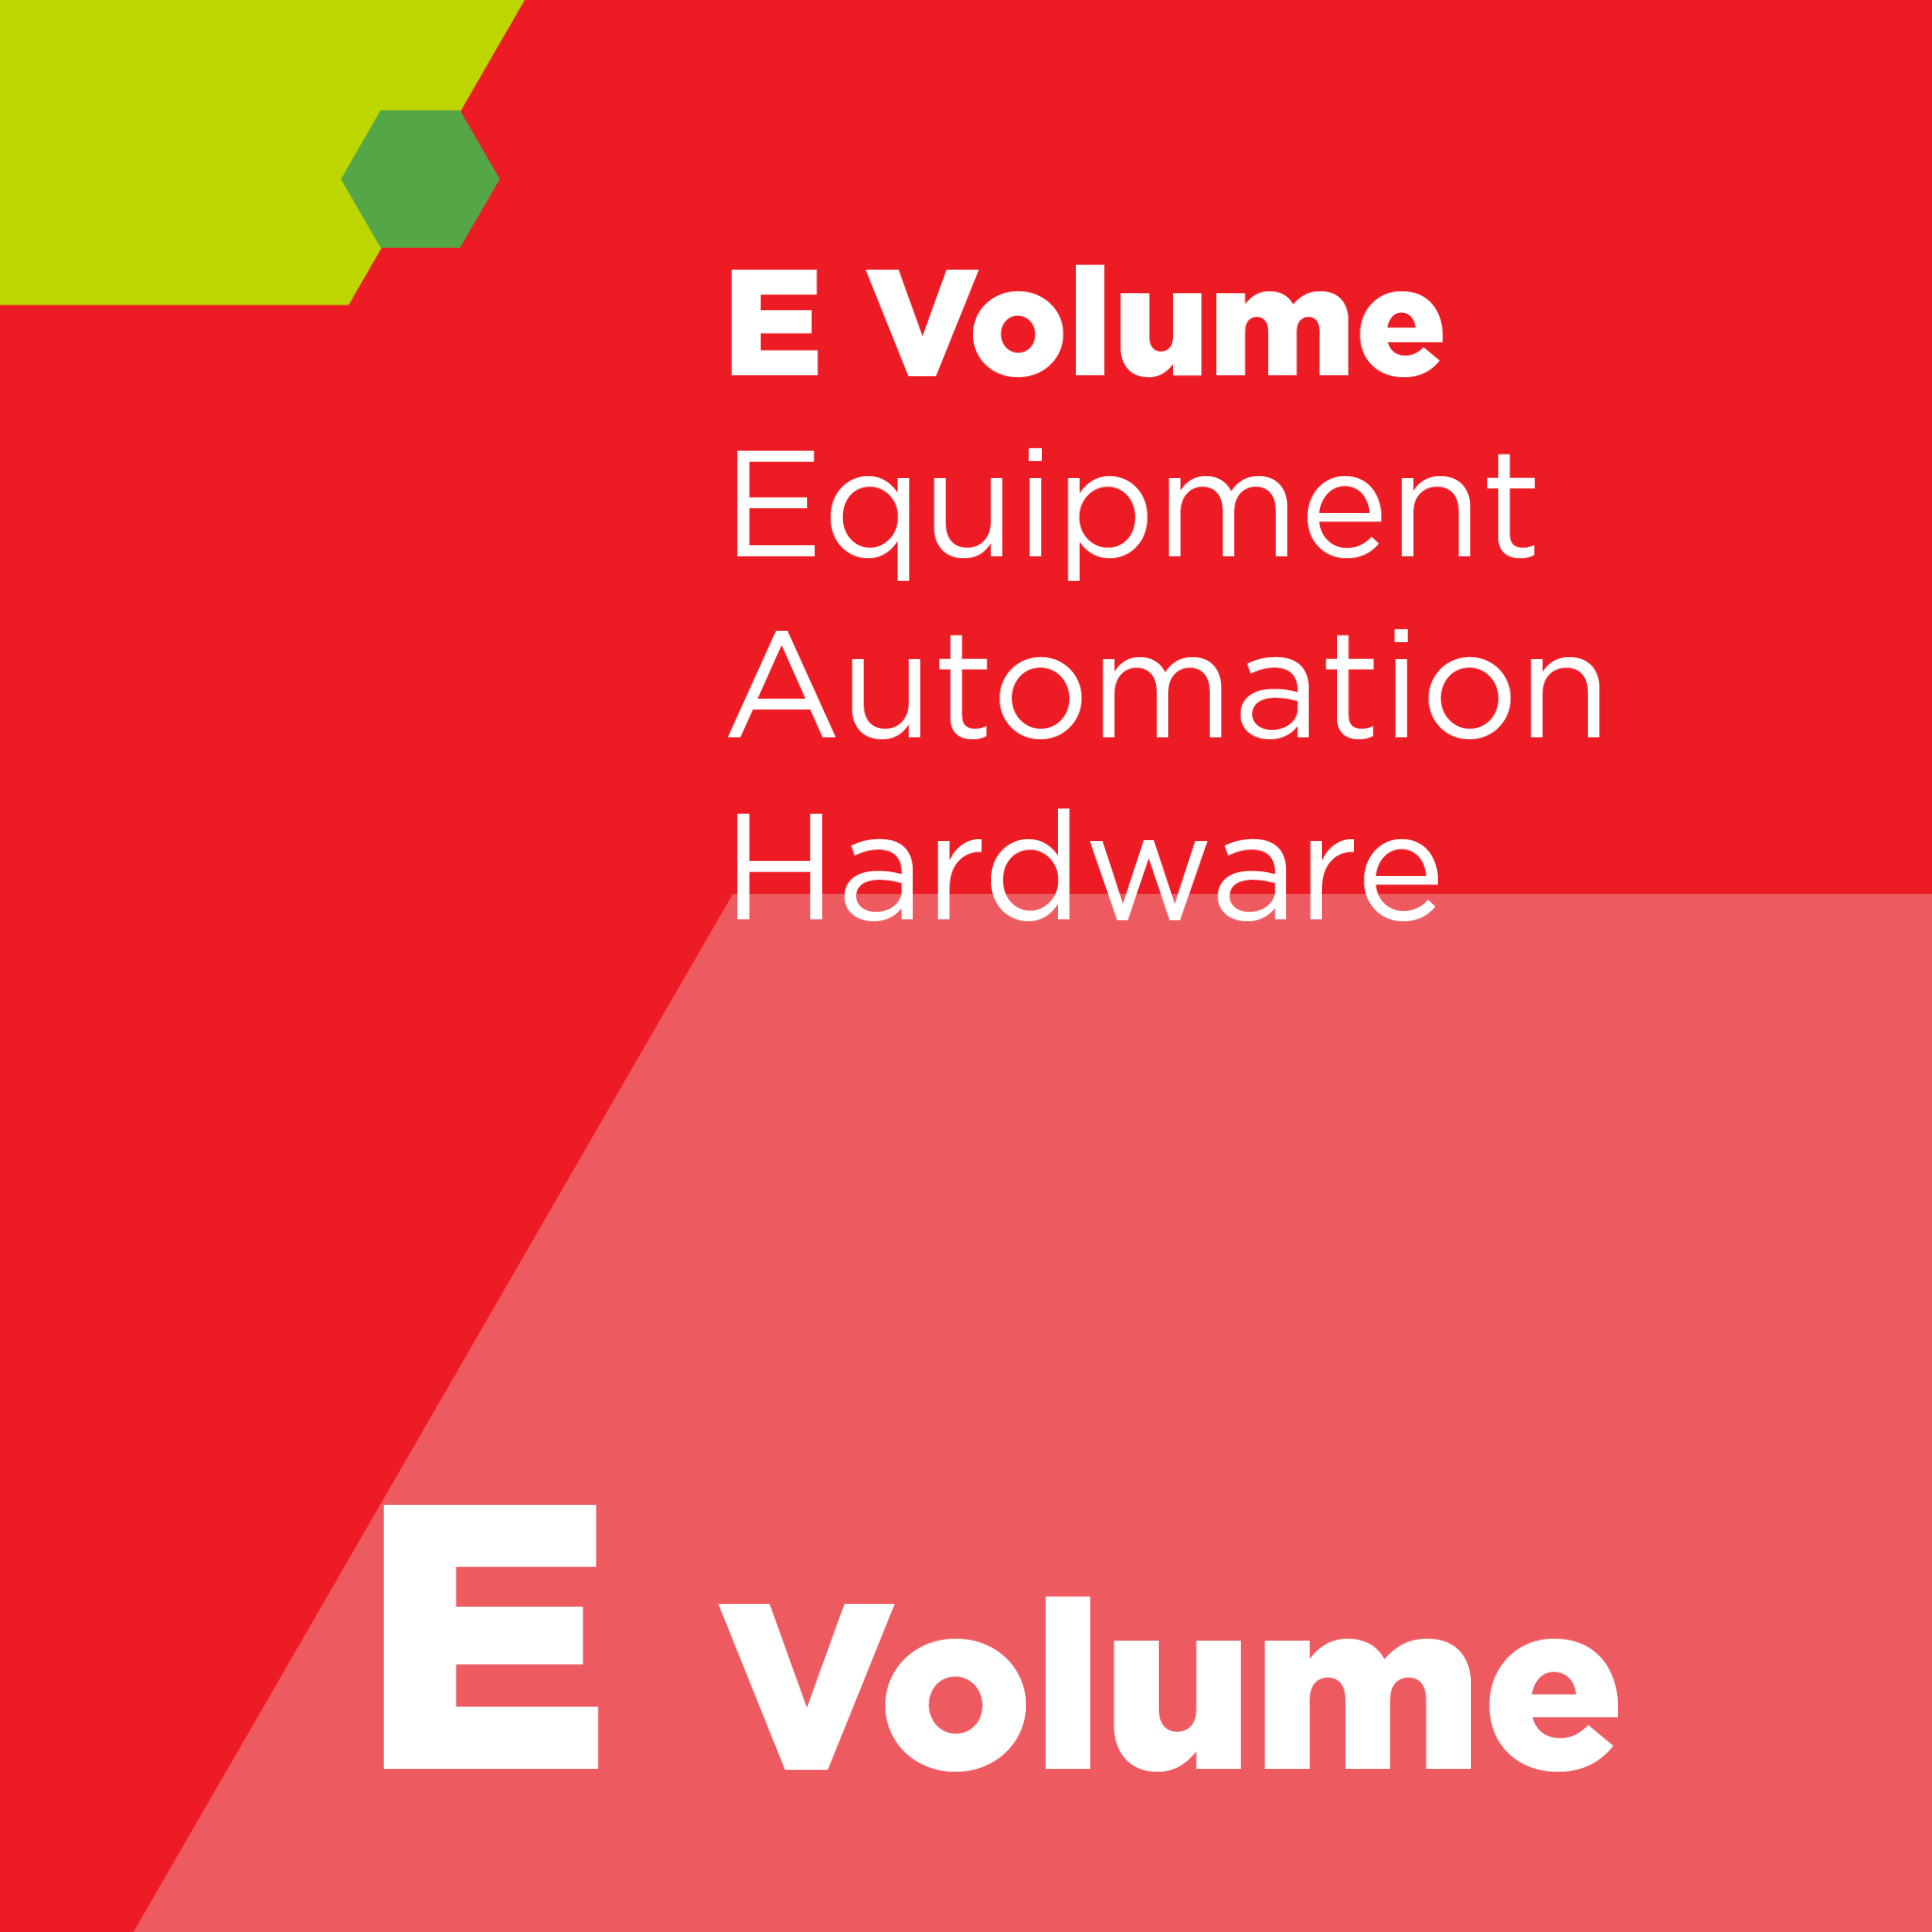 E07300 - SEMI E73 - Specification for Vacuum Pump Interfaces - Dry Pumps